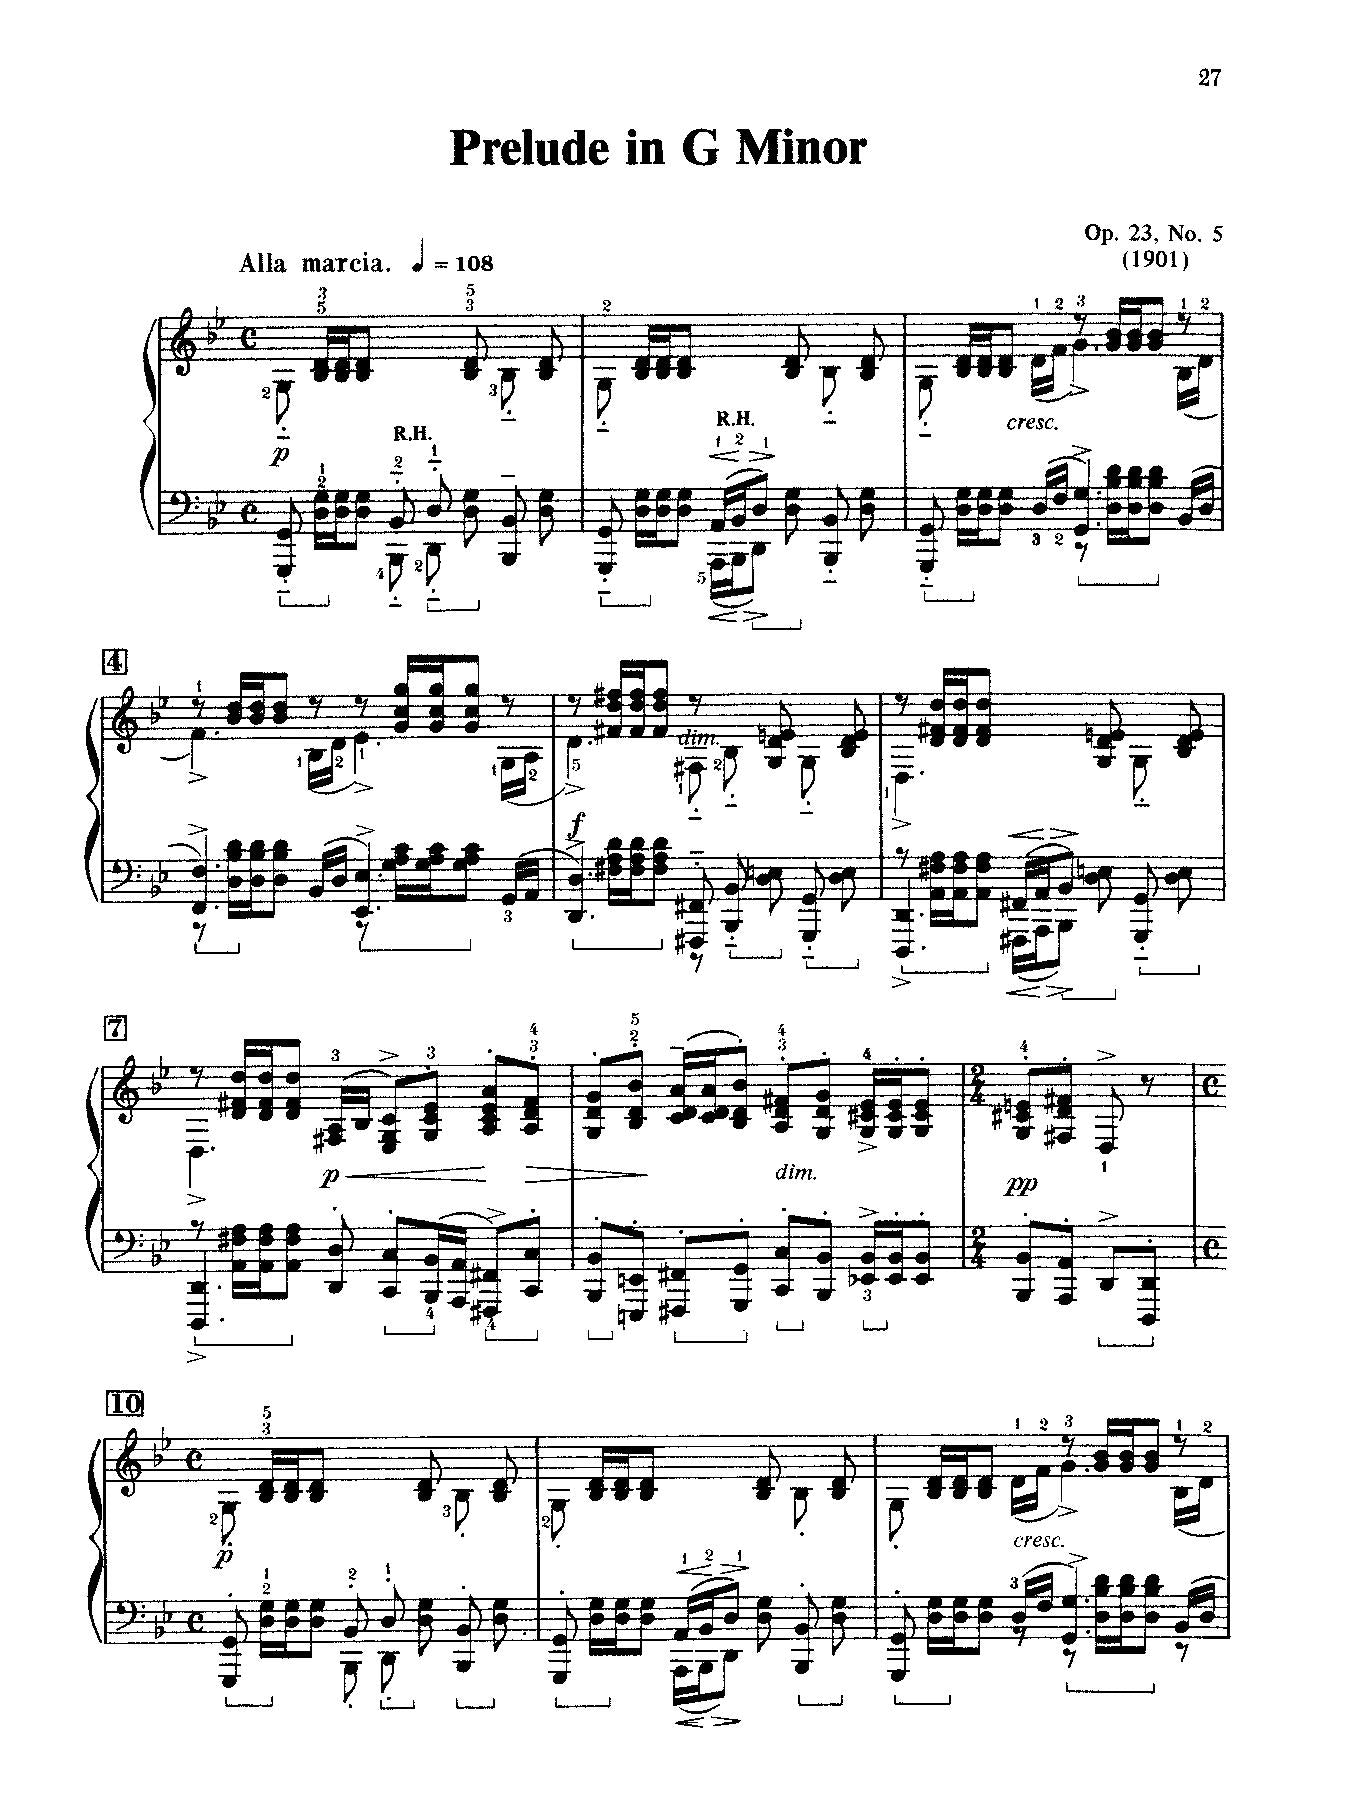 Rachmaninoff: Preludes, Opus 23